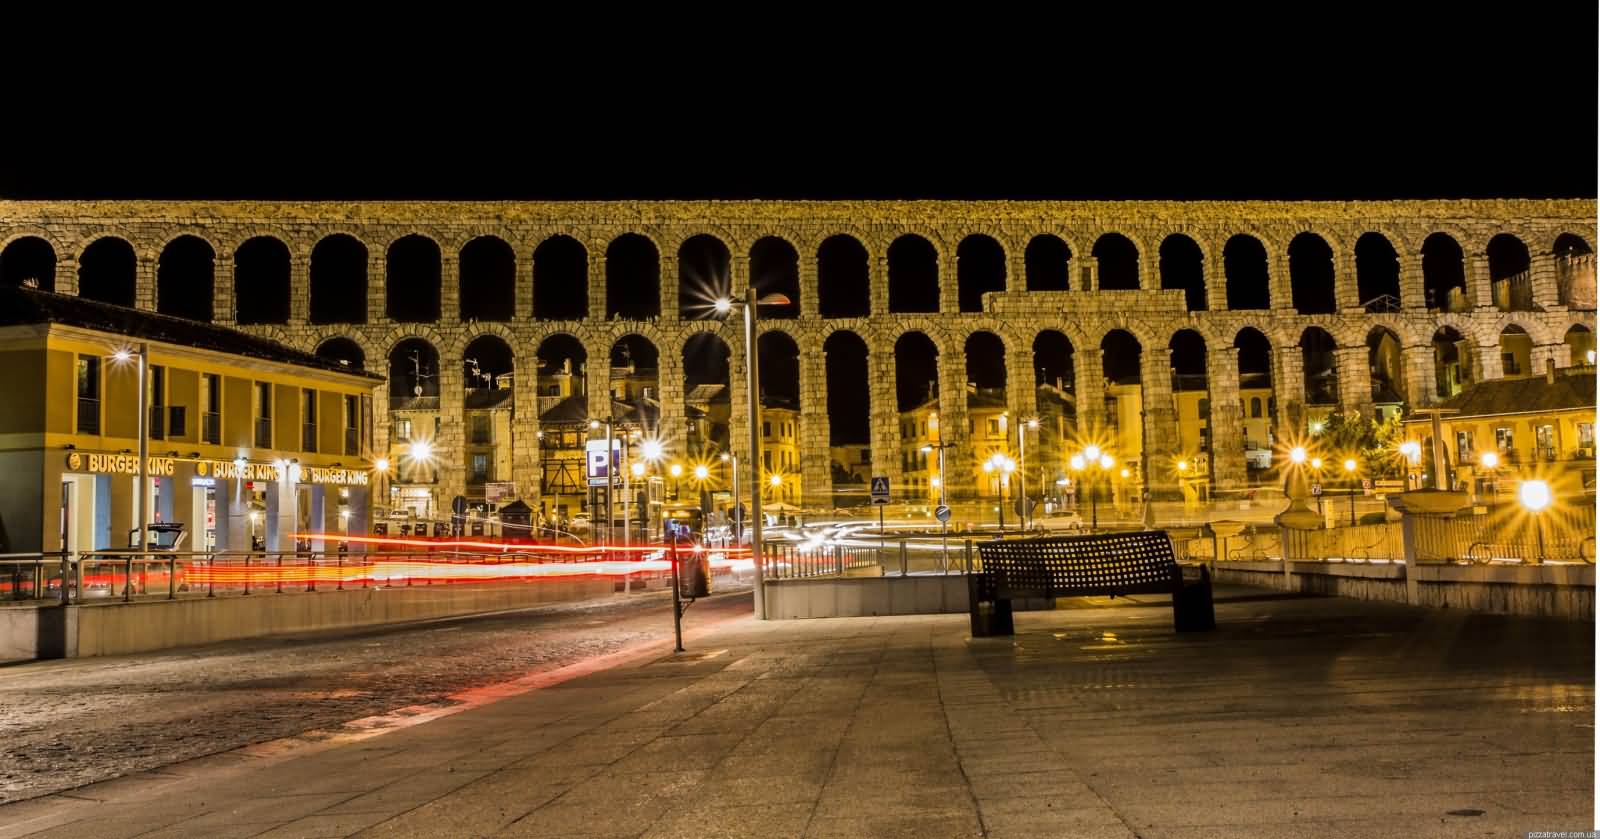 Aqueduct Of Segovia At Night